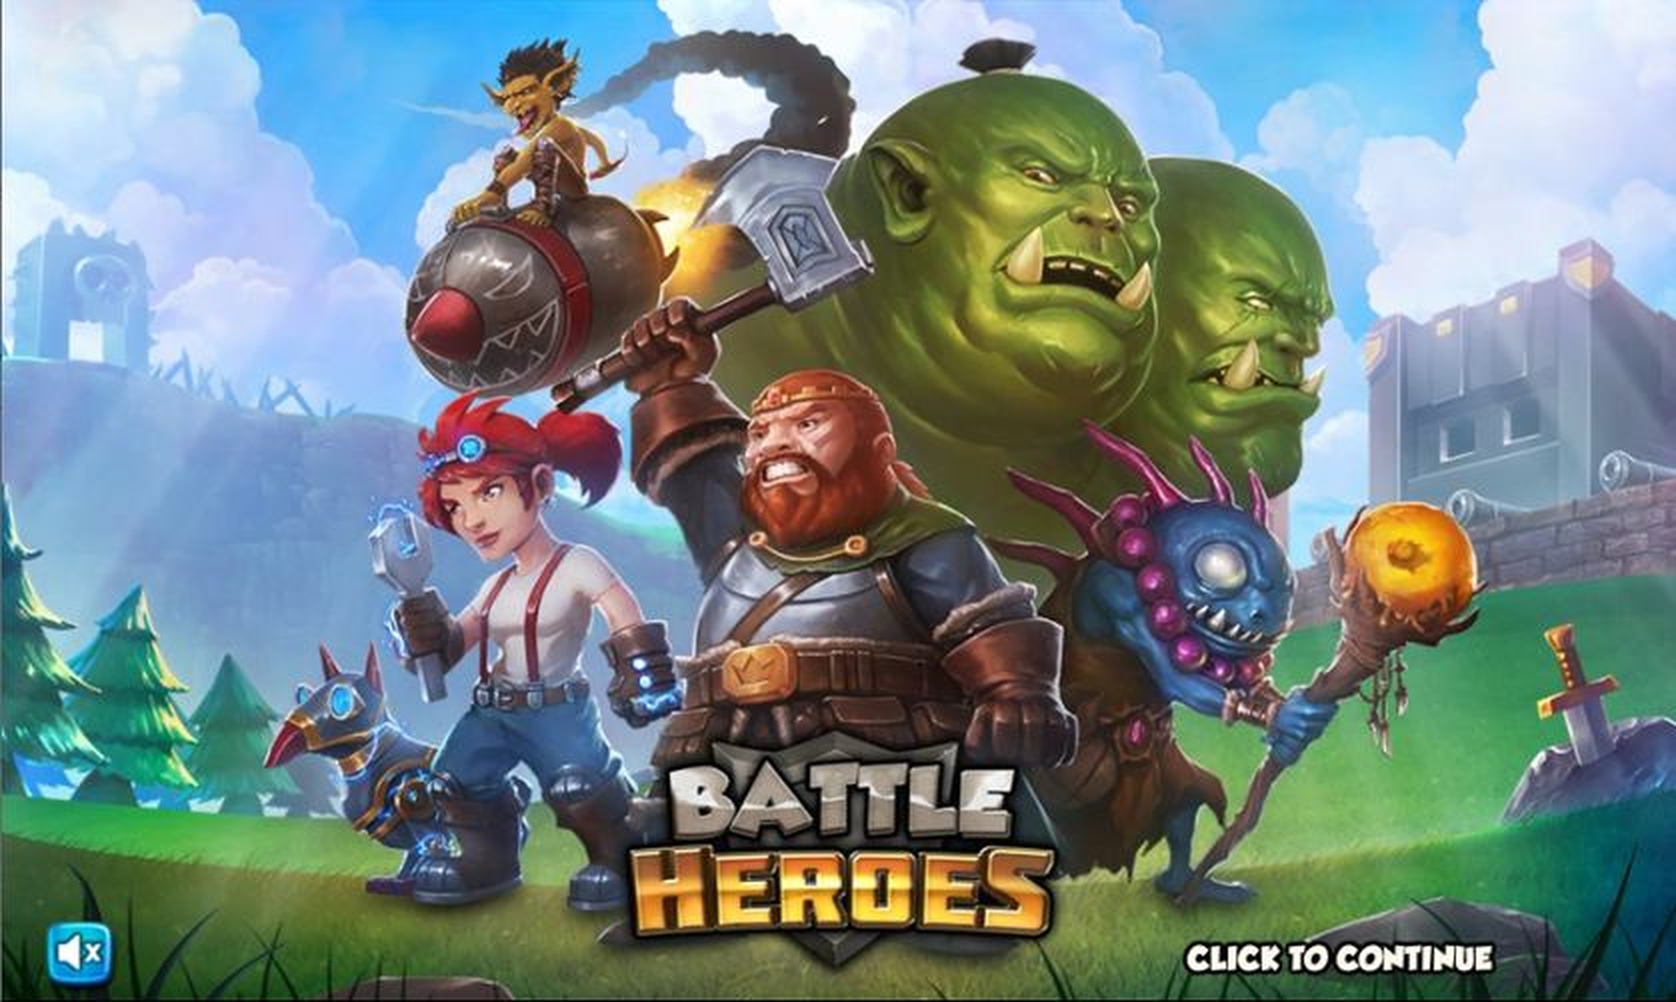 Battle Heroes demo